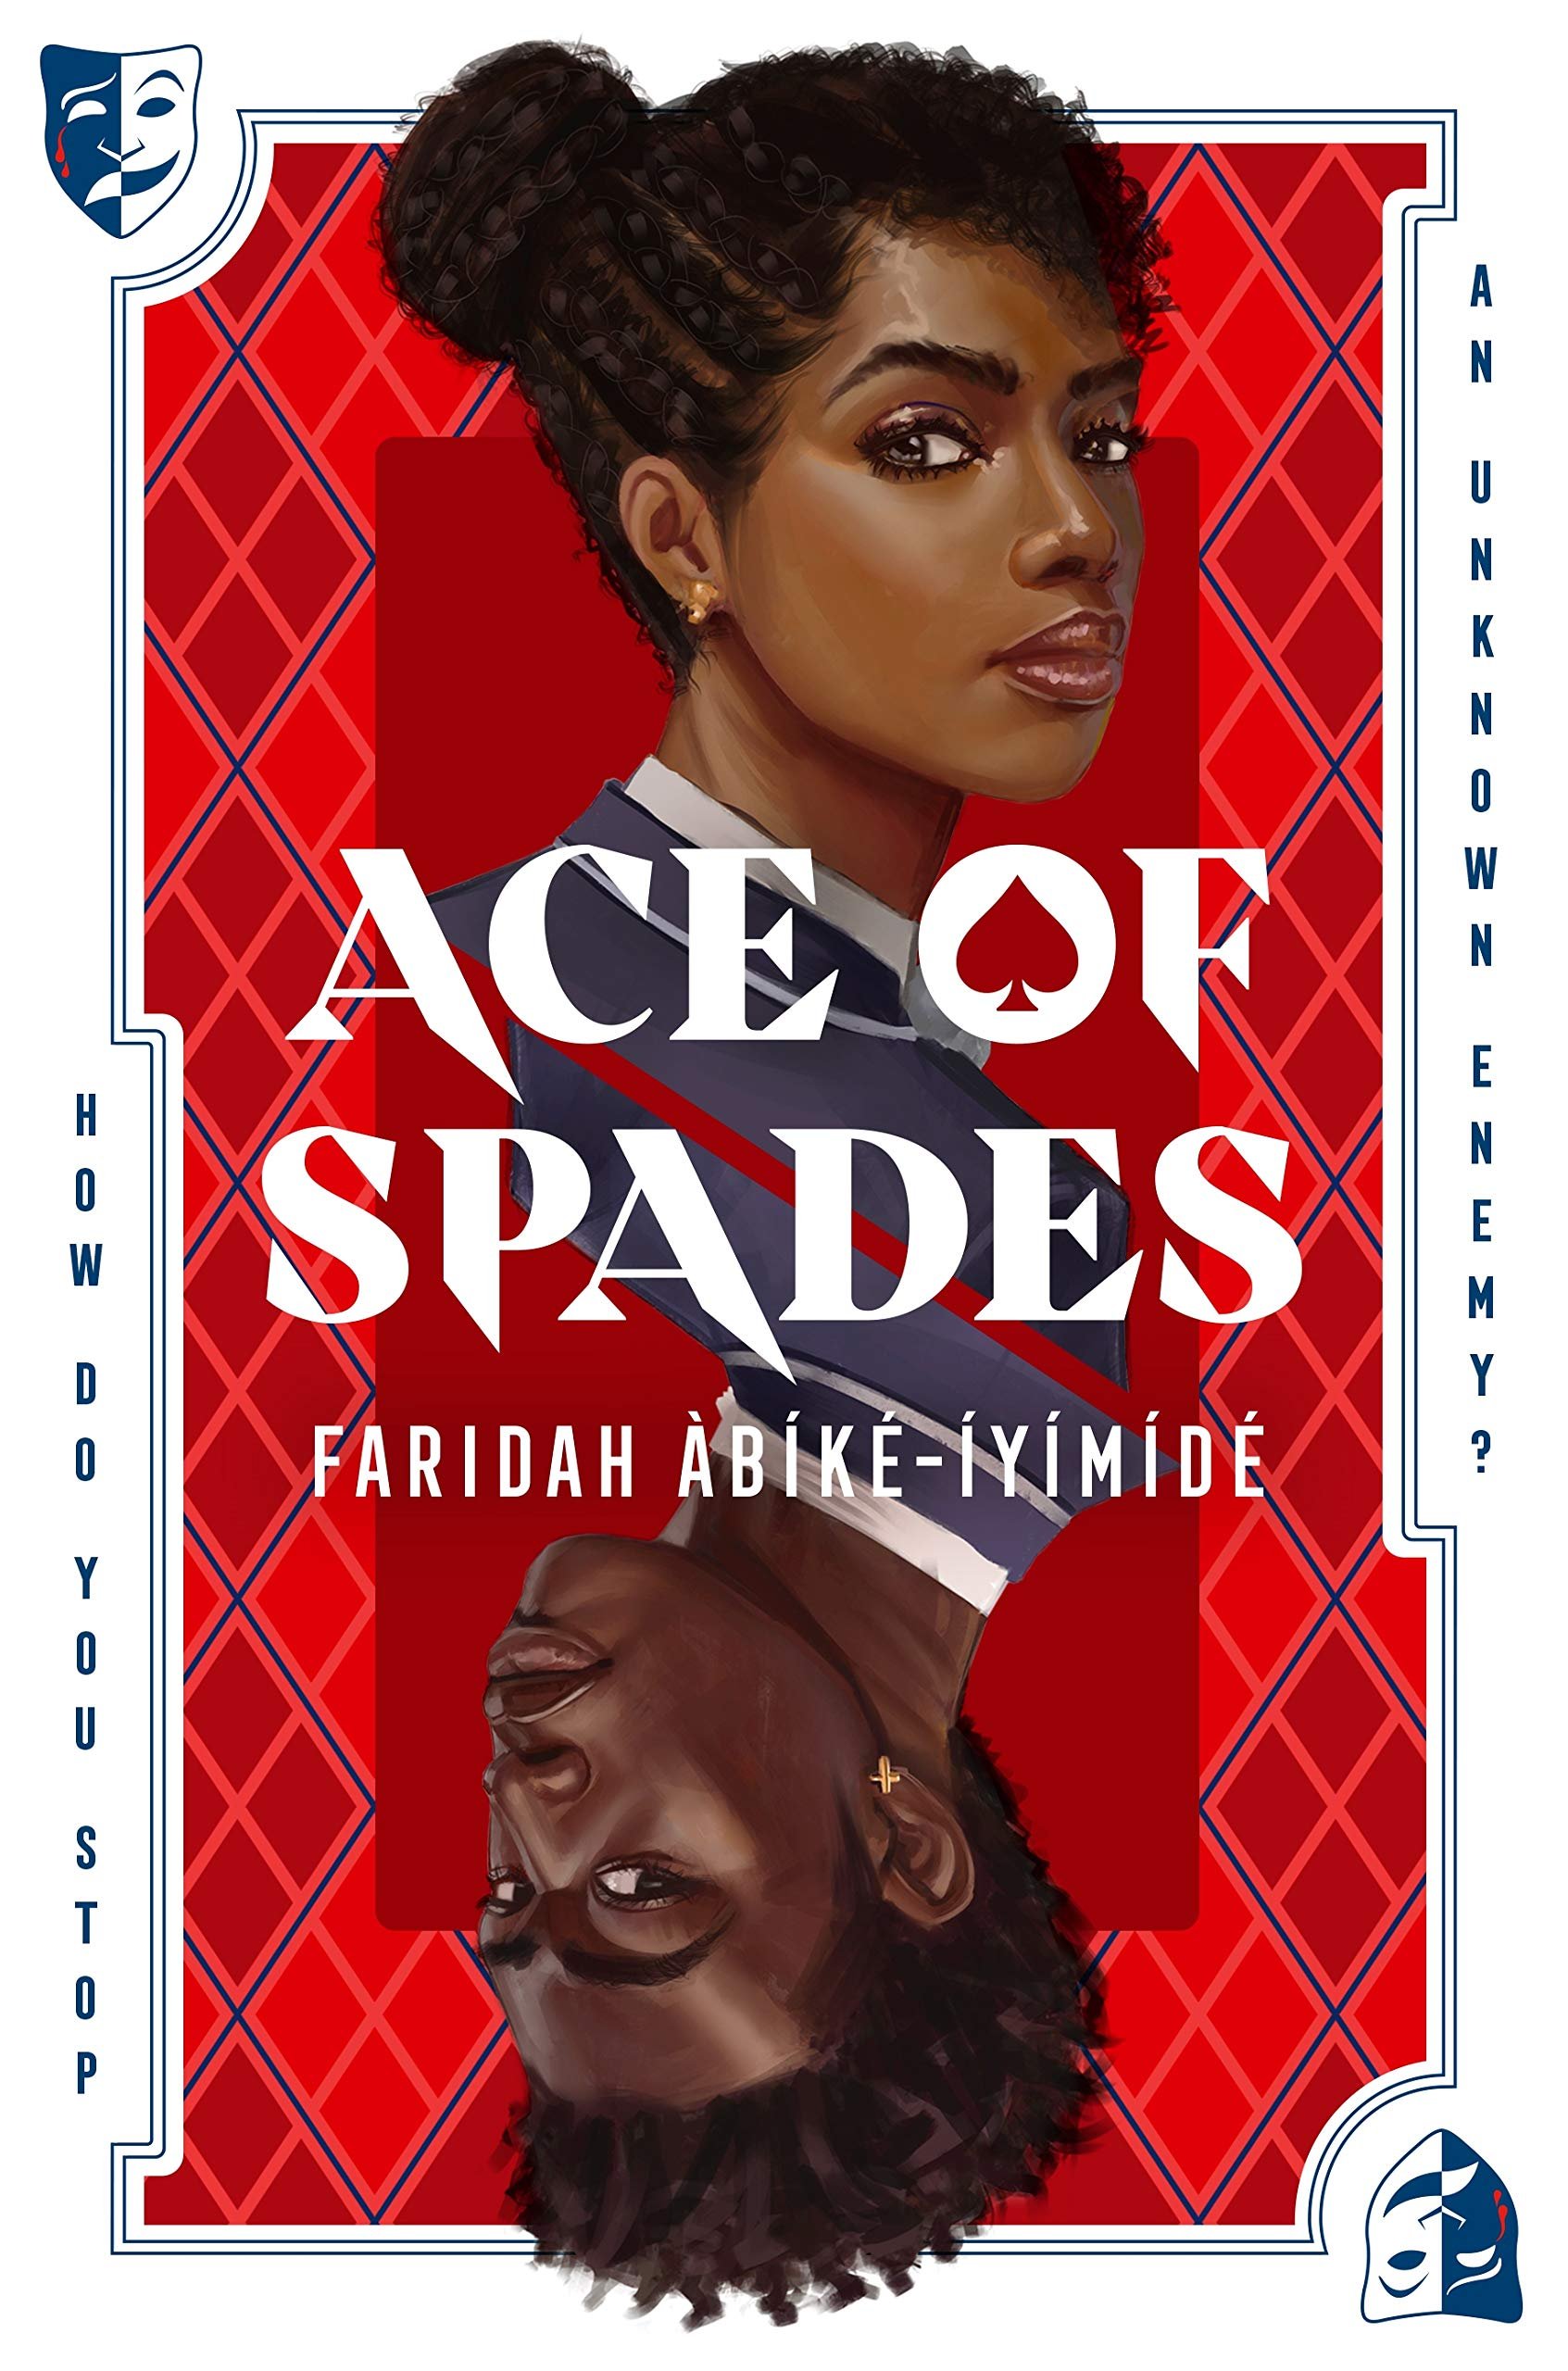 Ace of Spades US.jpeg